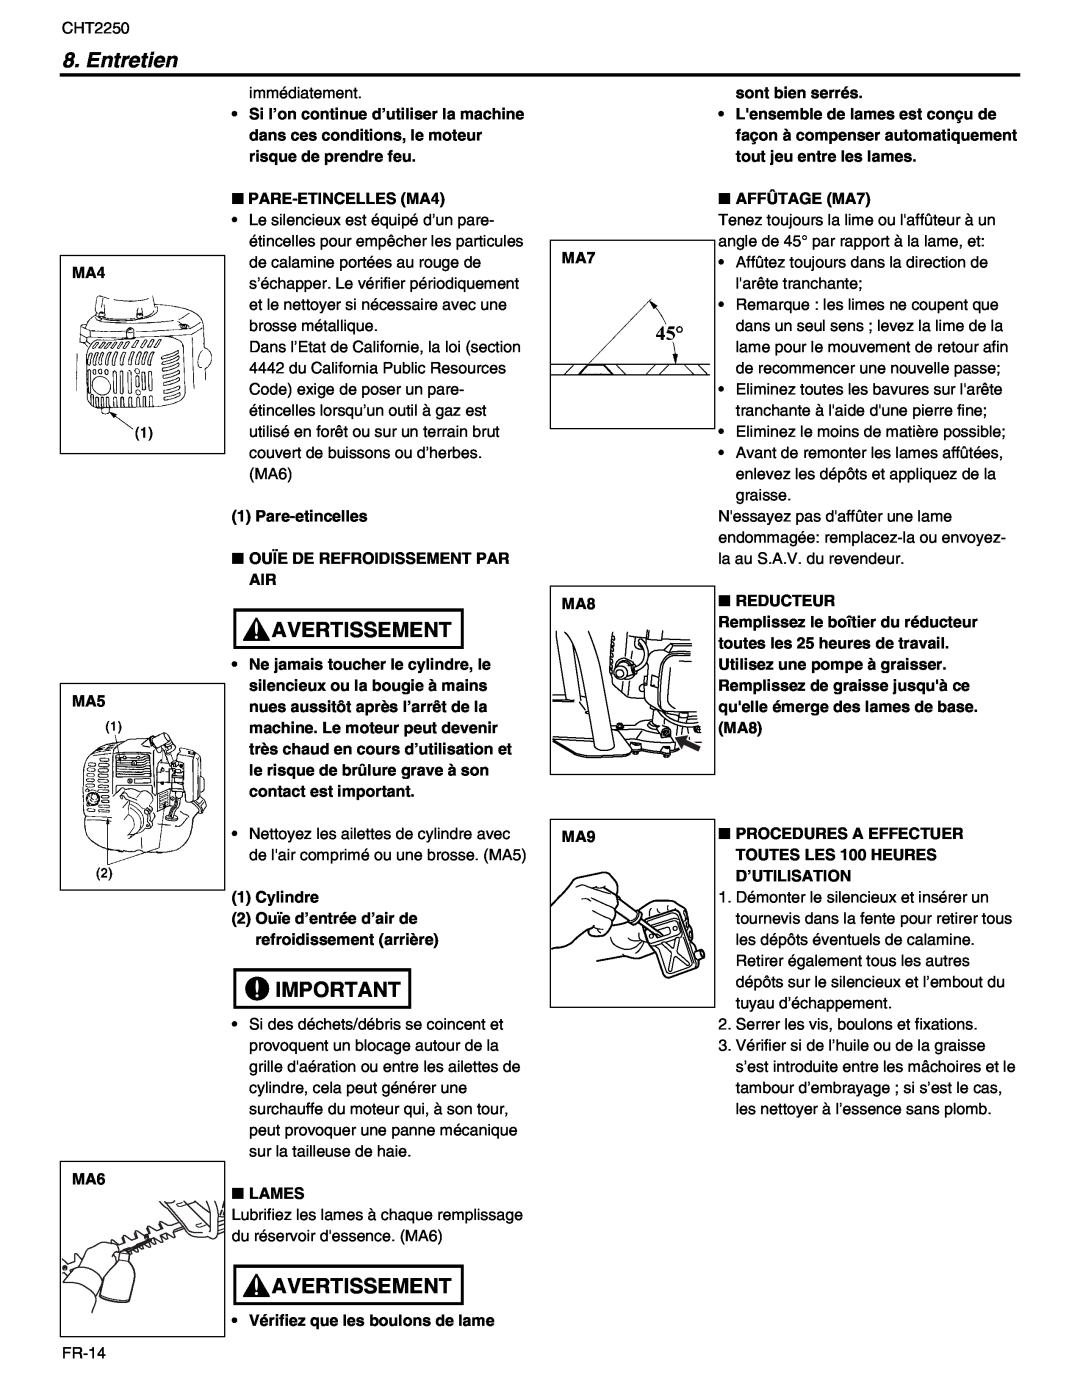 RedMax CHT2250 manual Entretien, Avertissement, FR-14 